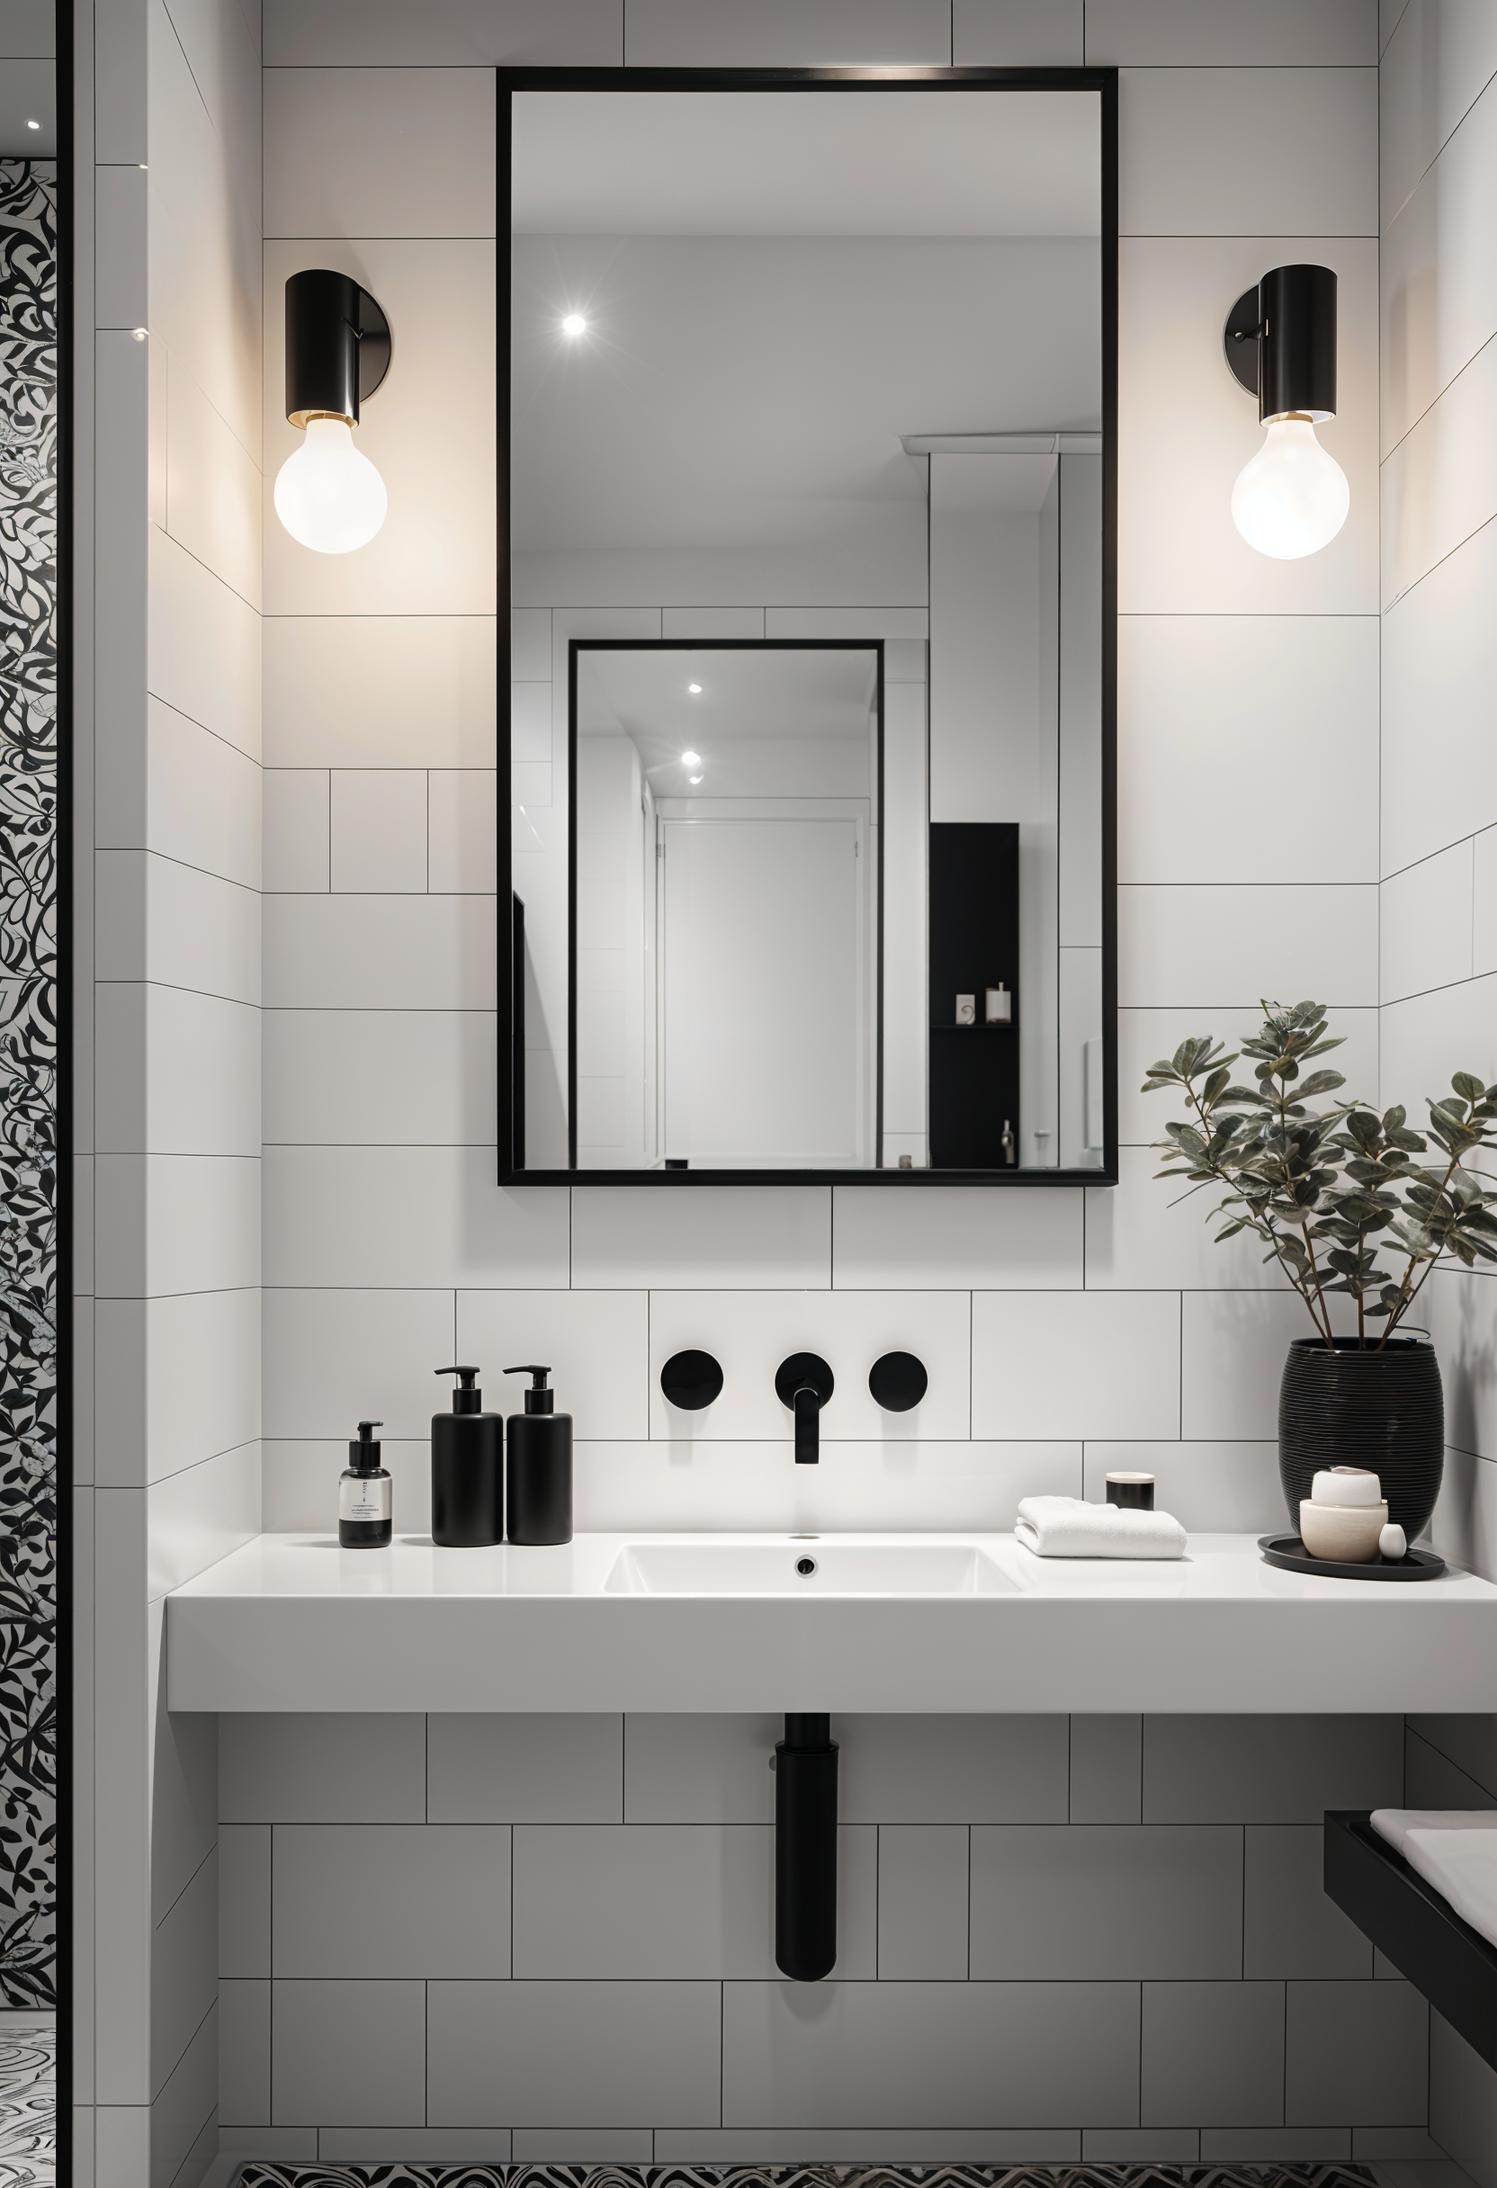 8. Sleek Monochrome Bathroom Design-1